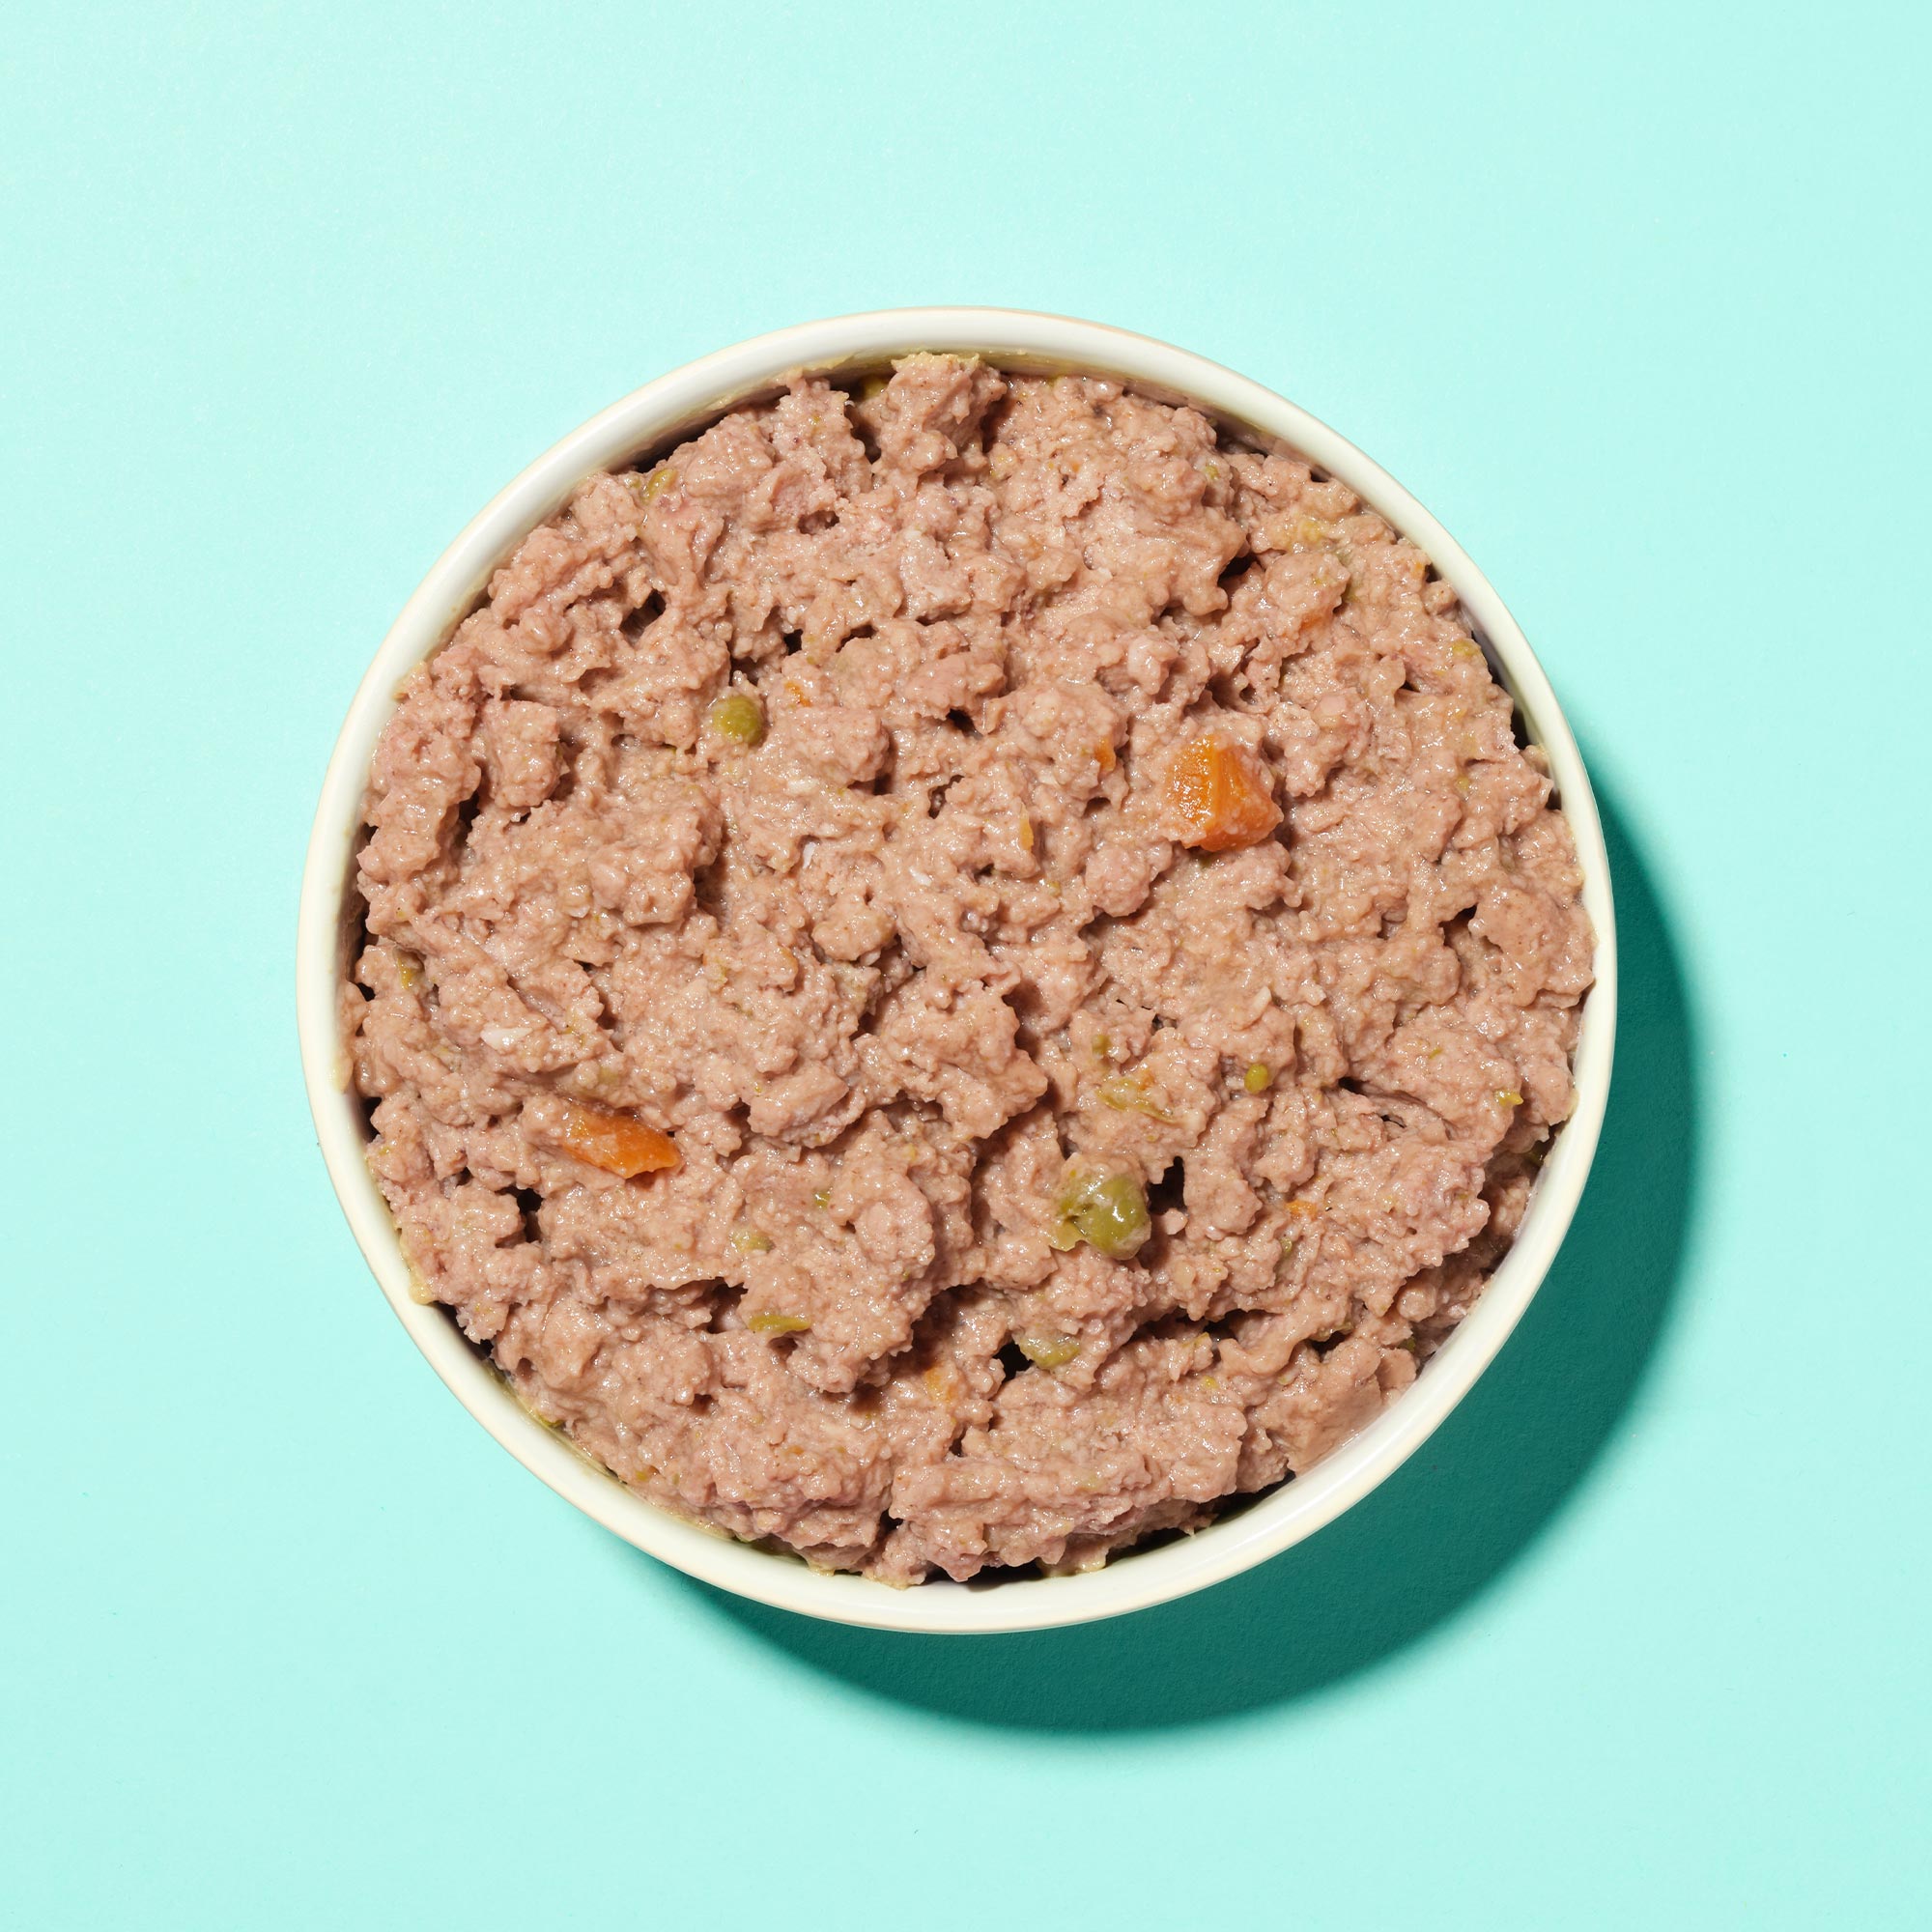 POOCH & MUTT Dog Wet Food With Turkey & Duck (375 gr)